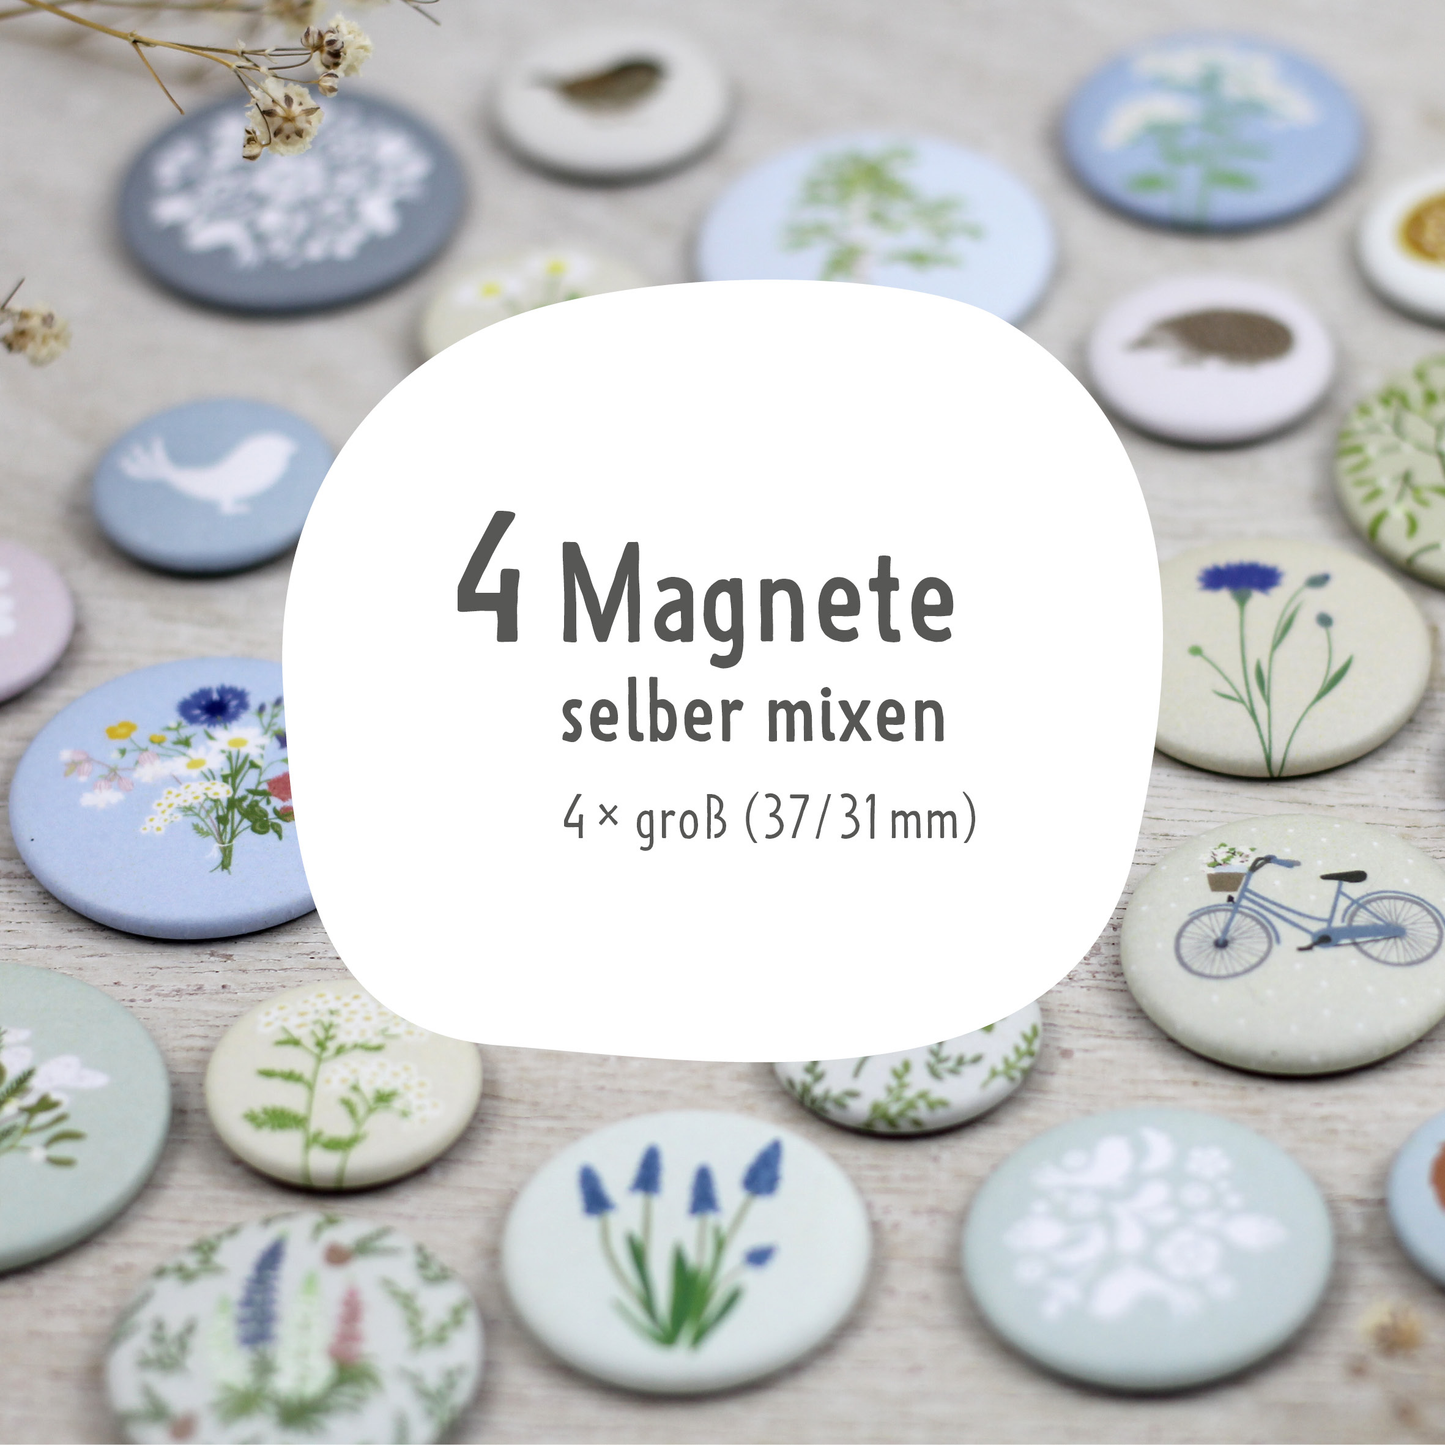 4 Magnete selber mixen (4× groß)